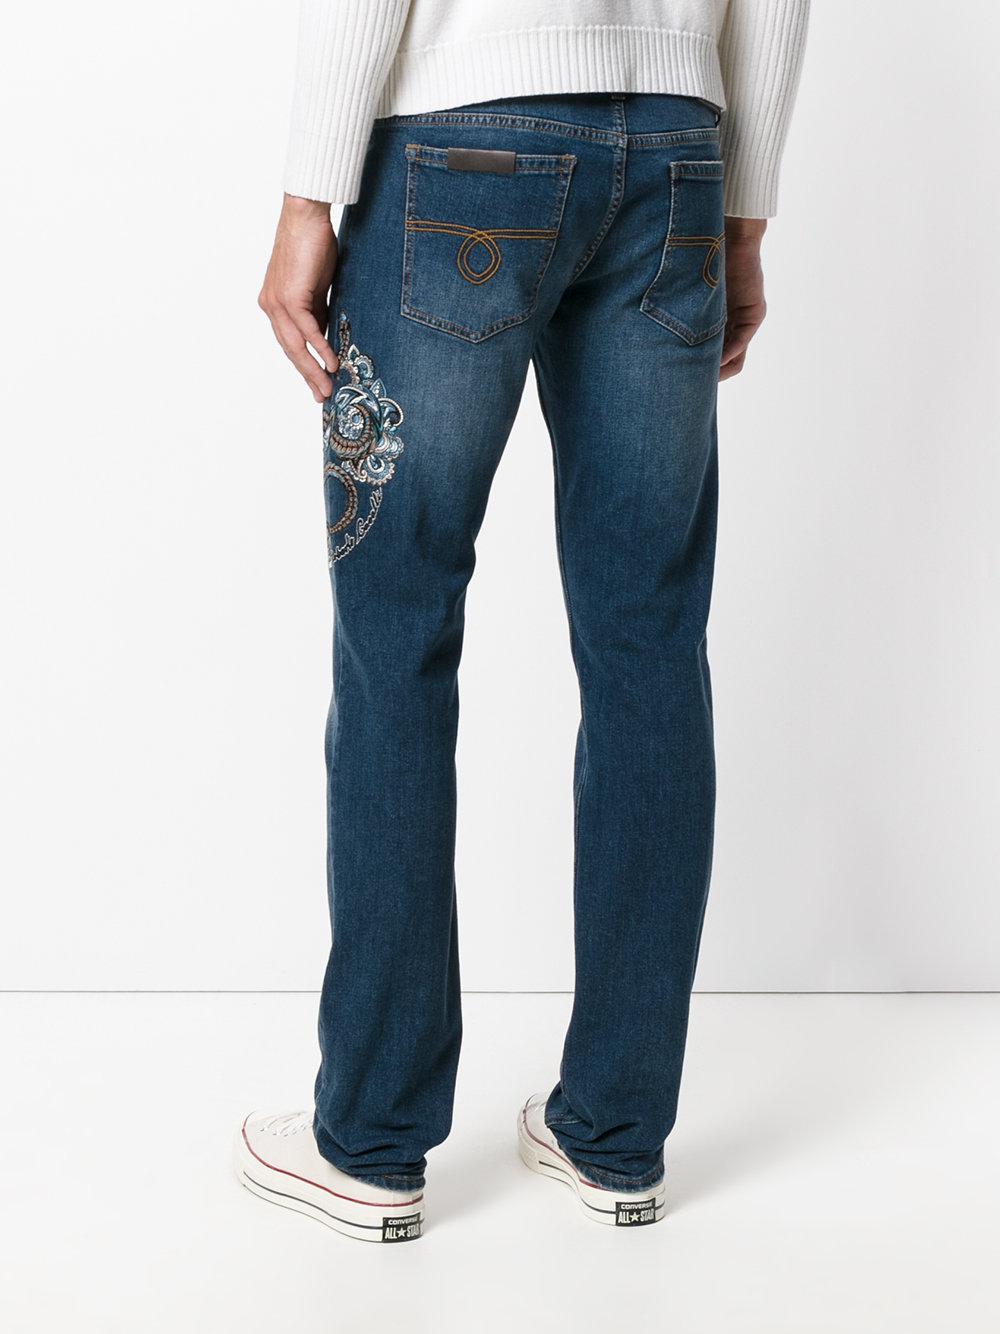 Roberto Cavalli Denim Embroidered Regular Jeans in Blue for Men - Lyst